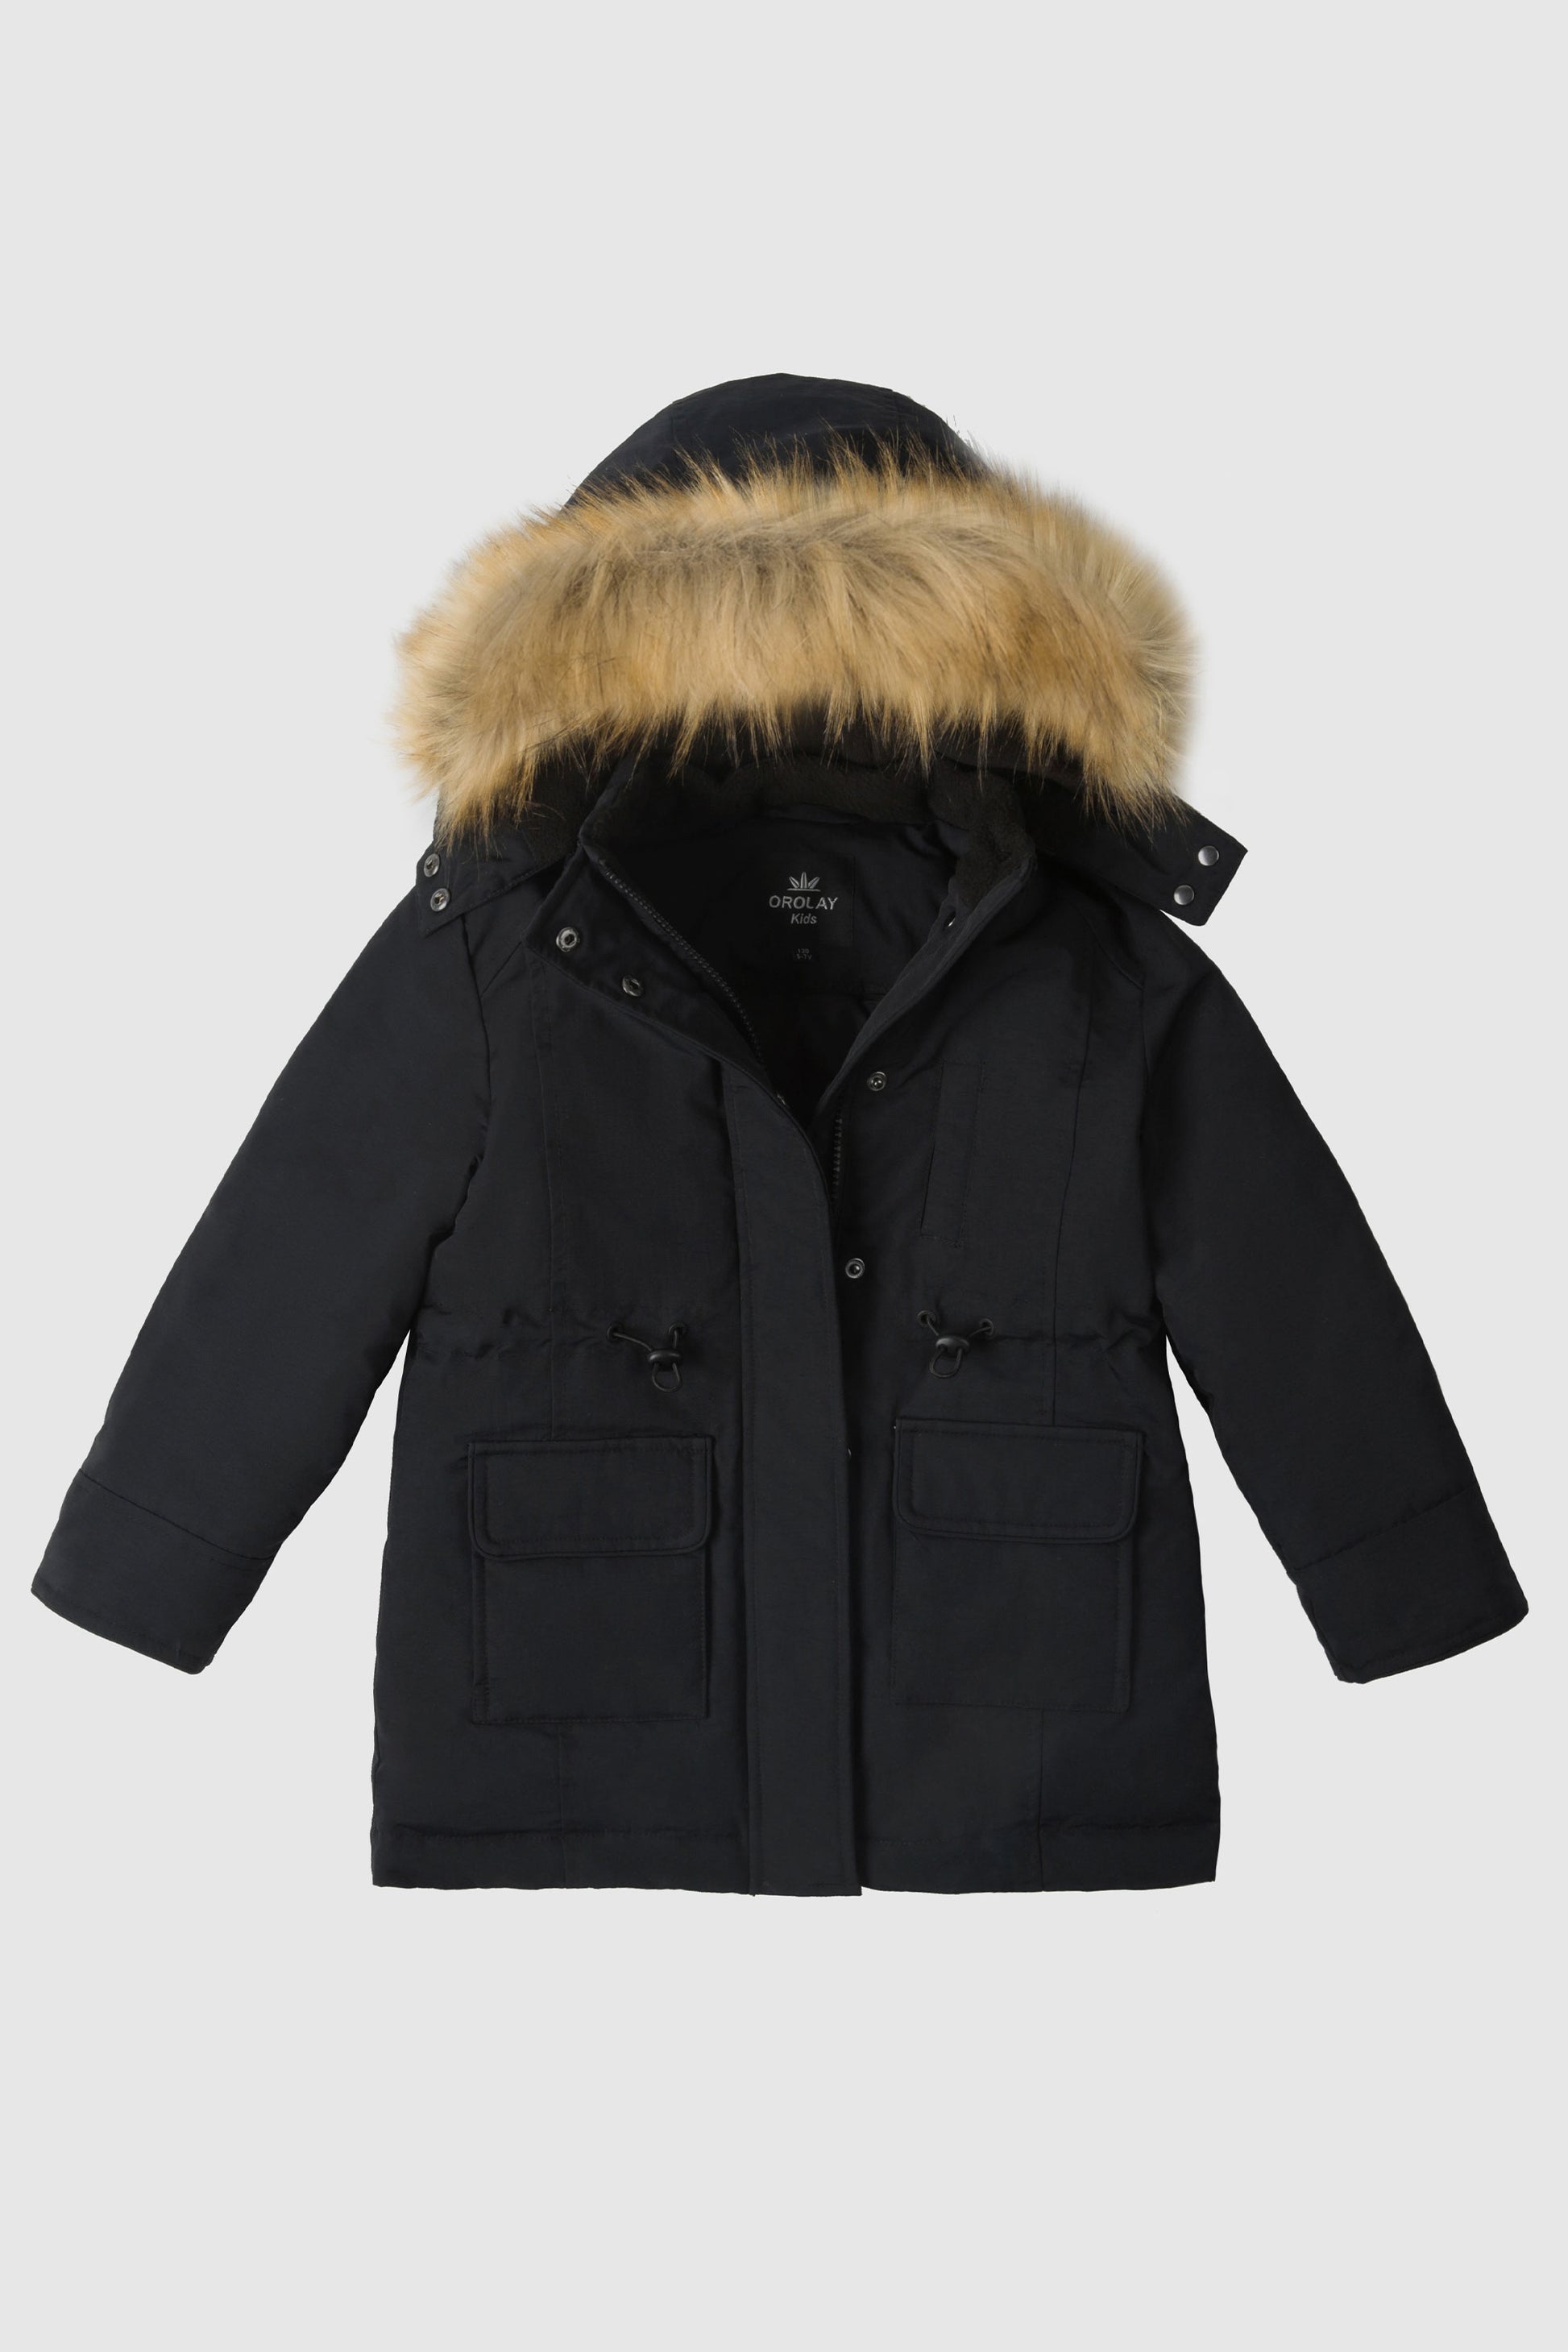 Orolay Kid's Fleece Lined Winter Coat with Hood